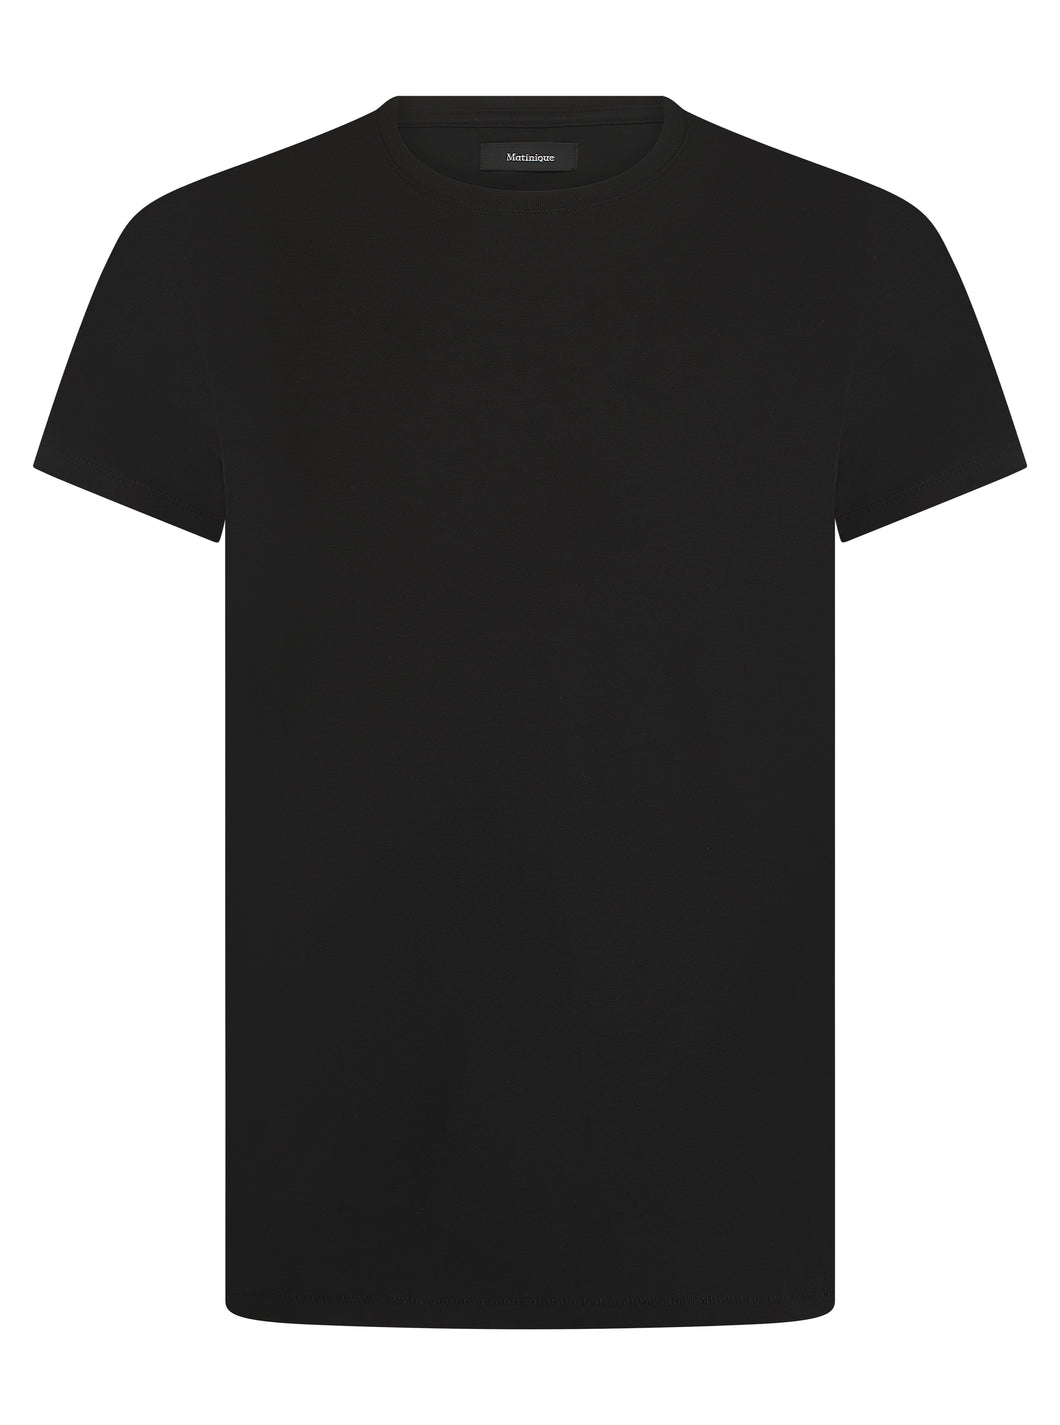 Jermalink T Shirt Black